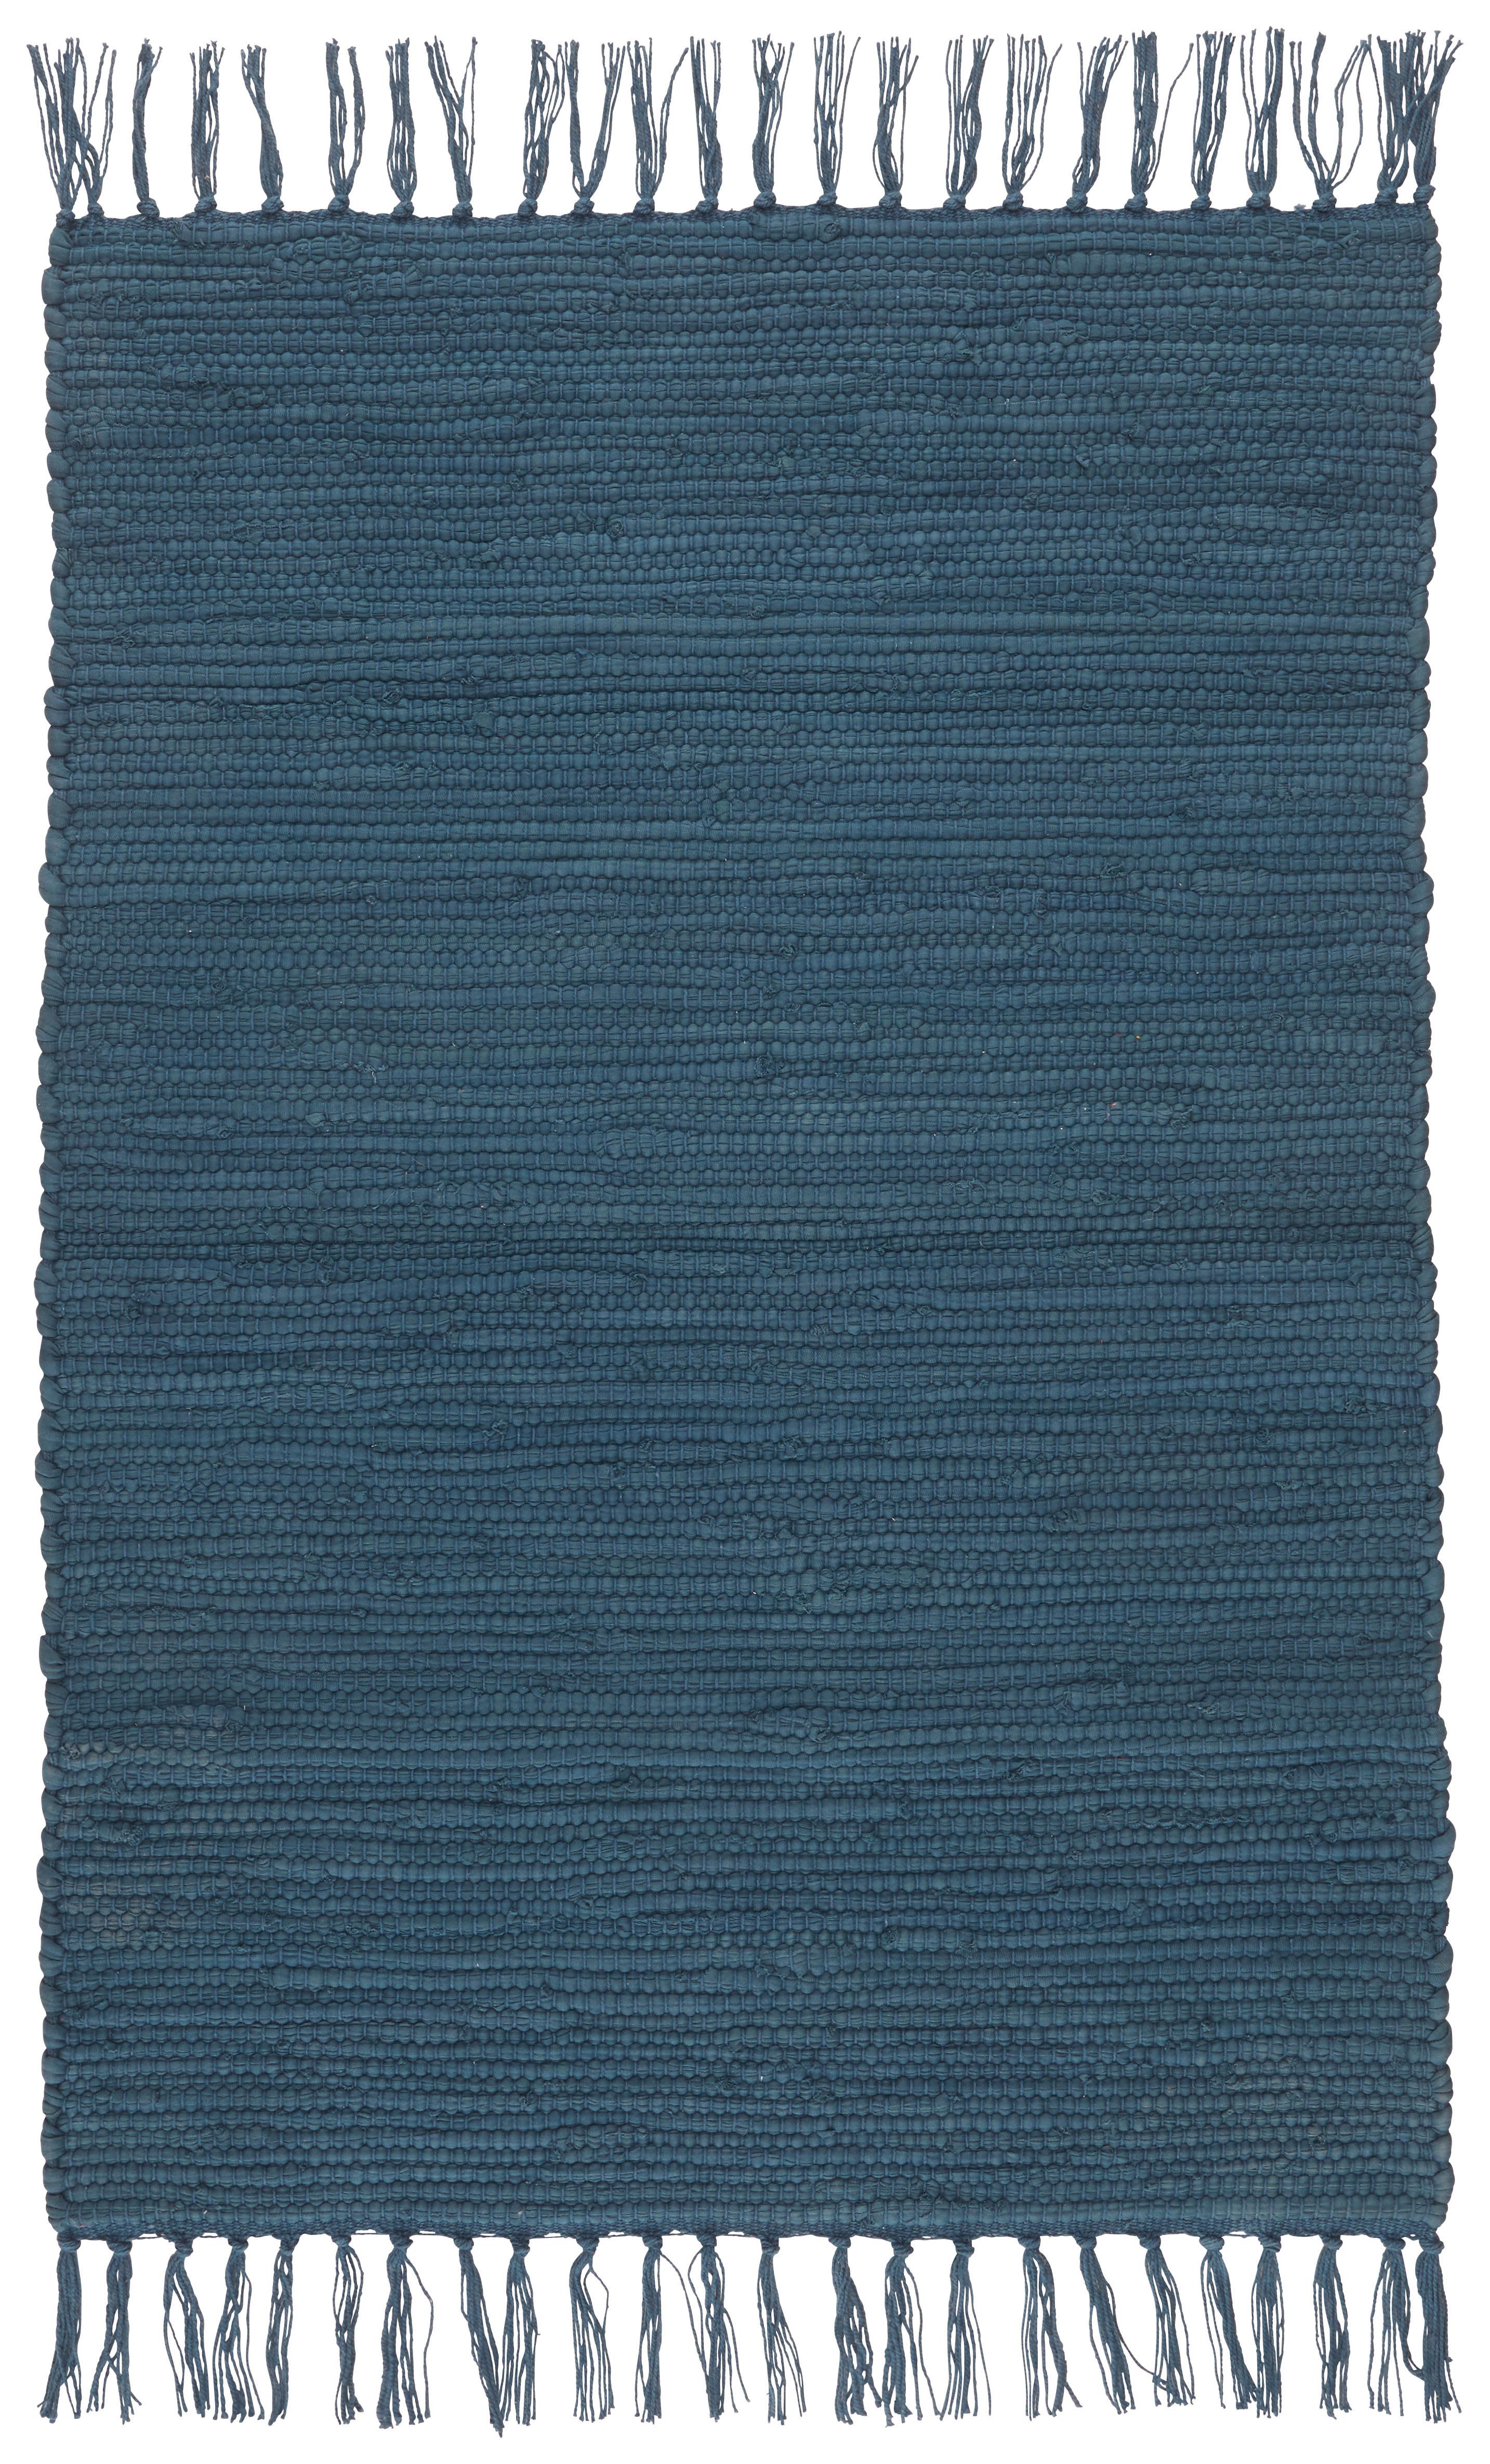 Hadrový Koberec Julia, 60/90cm, Tmavomodrá - tmavě modrá, Romantický / Rustikální, textil (60/90cm) - Modern Living